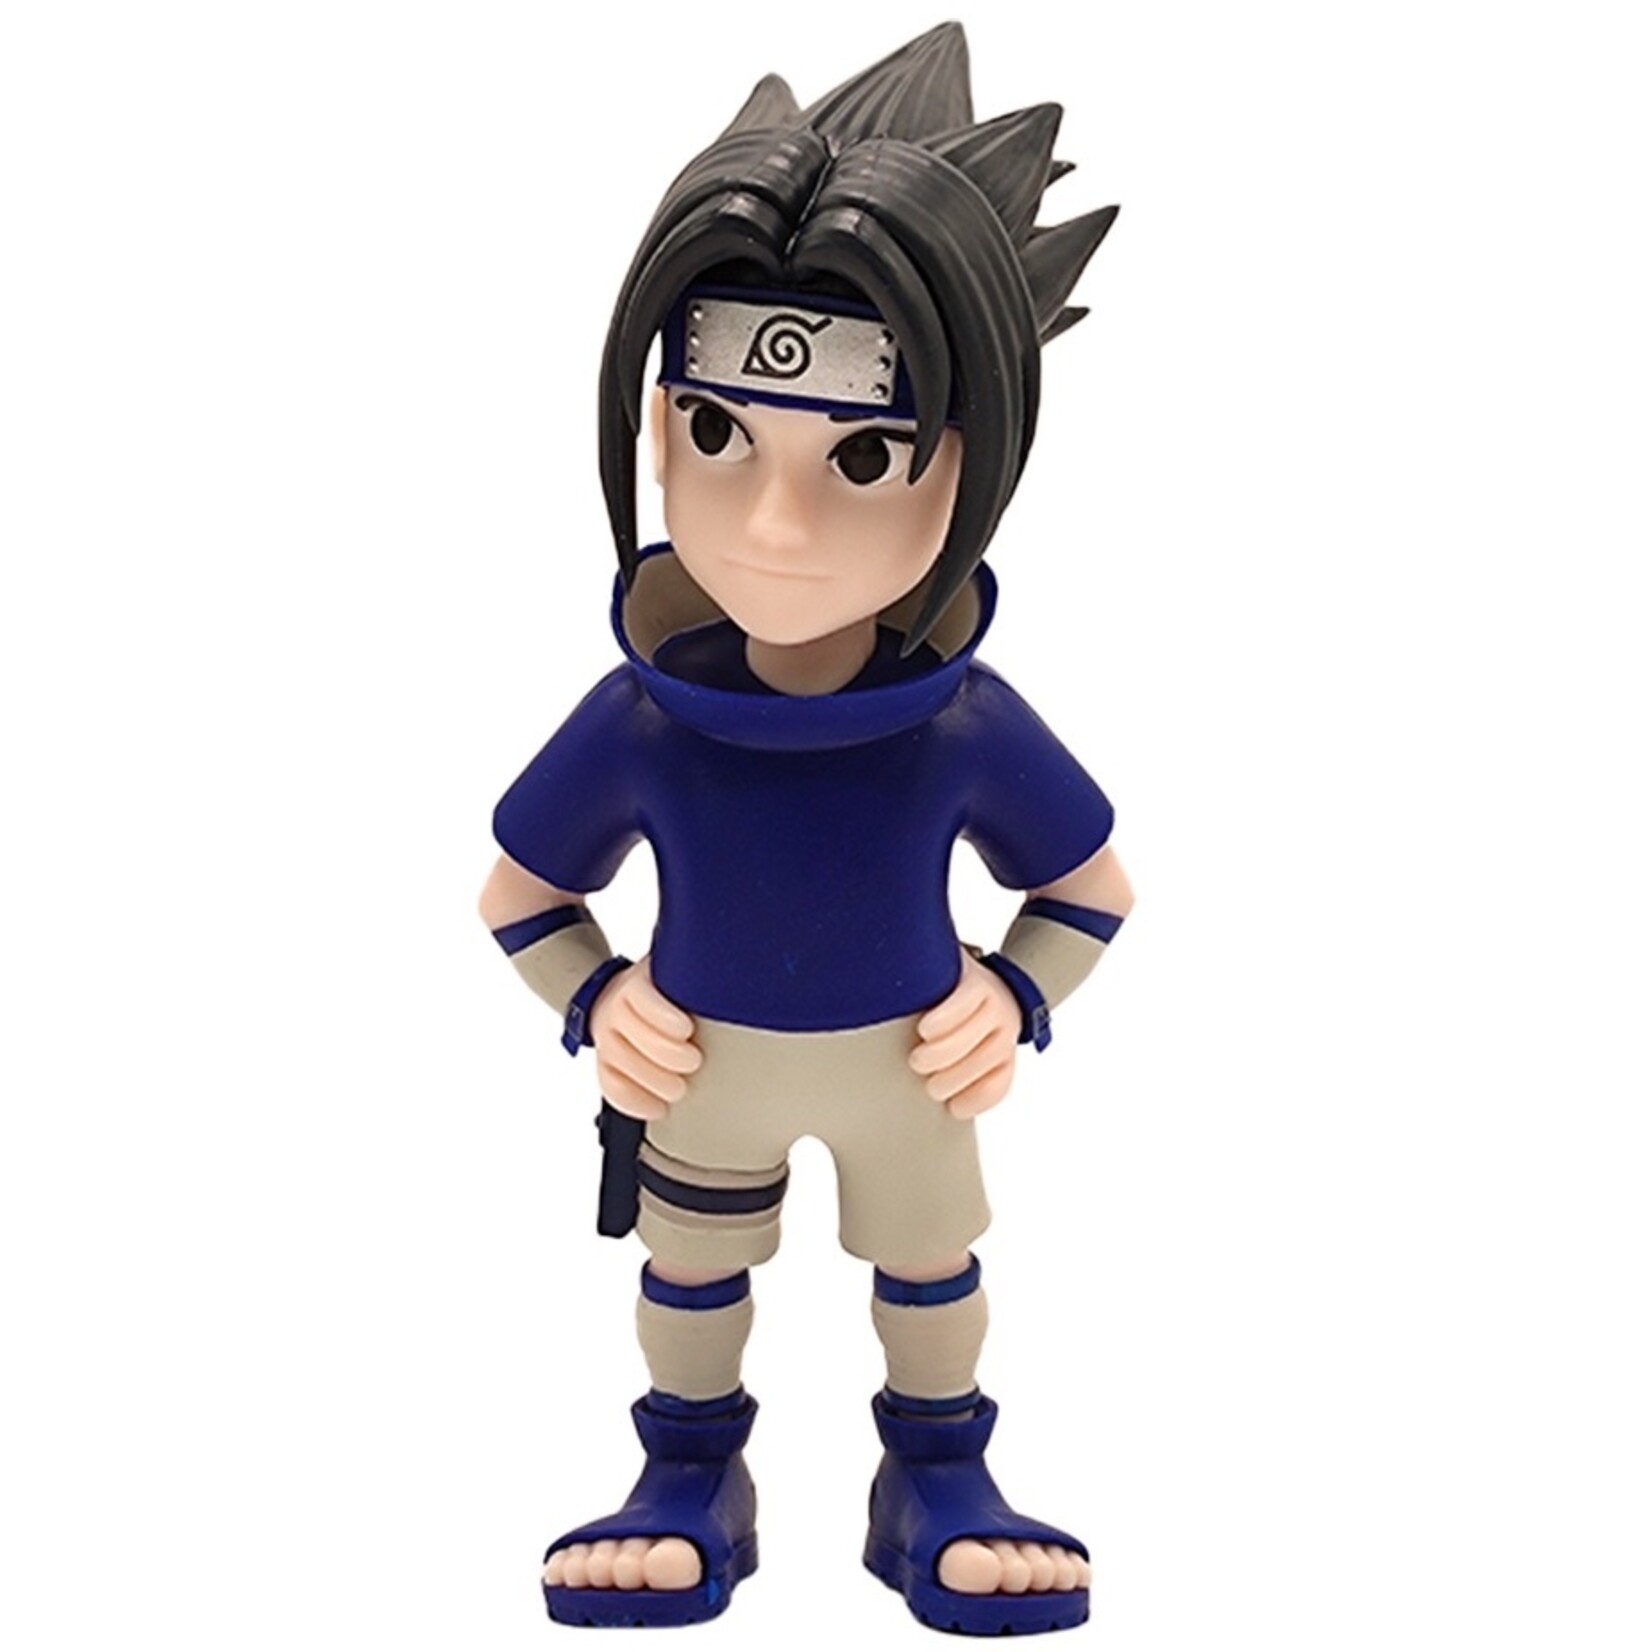 Minix Minix Naruto Shippuden Collectible Figurine Sasuke Uchiha 12 cm